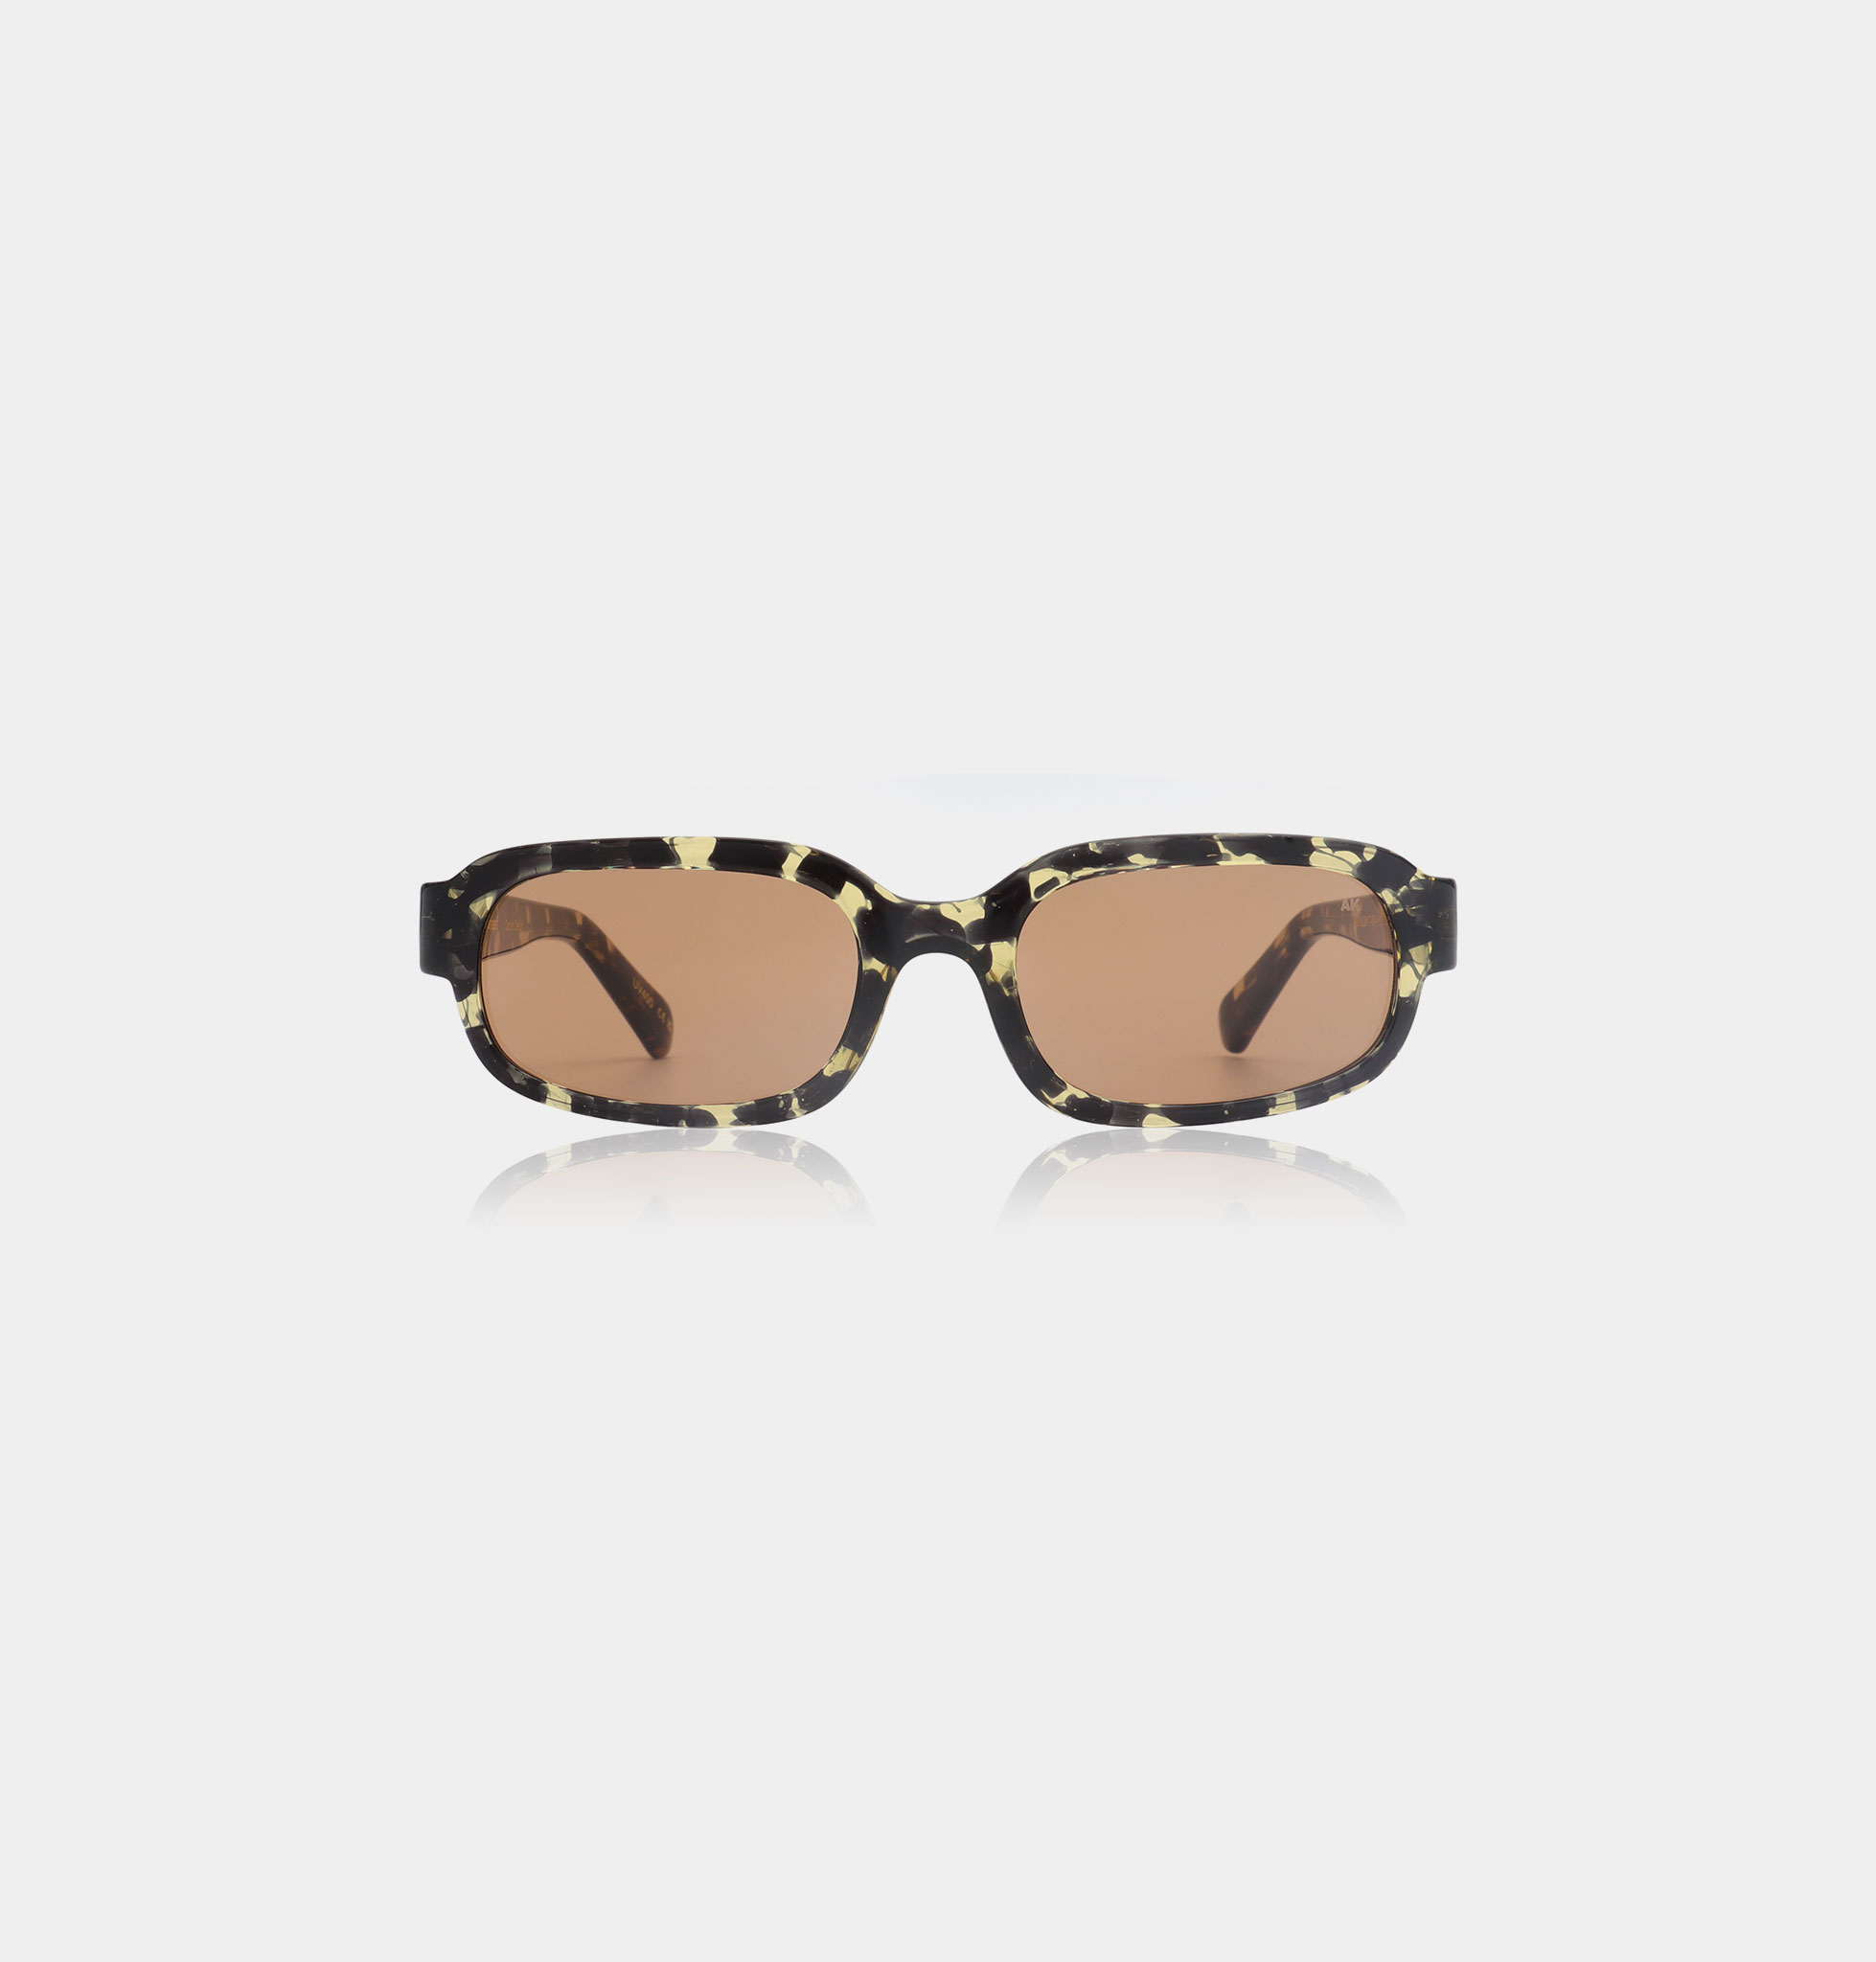 A.Kjaerbede zonnebril model WILL zwart geel met bronze glazen AKsunnies bril sunglasses eyewear